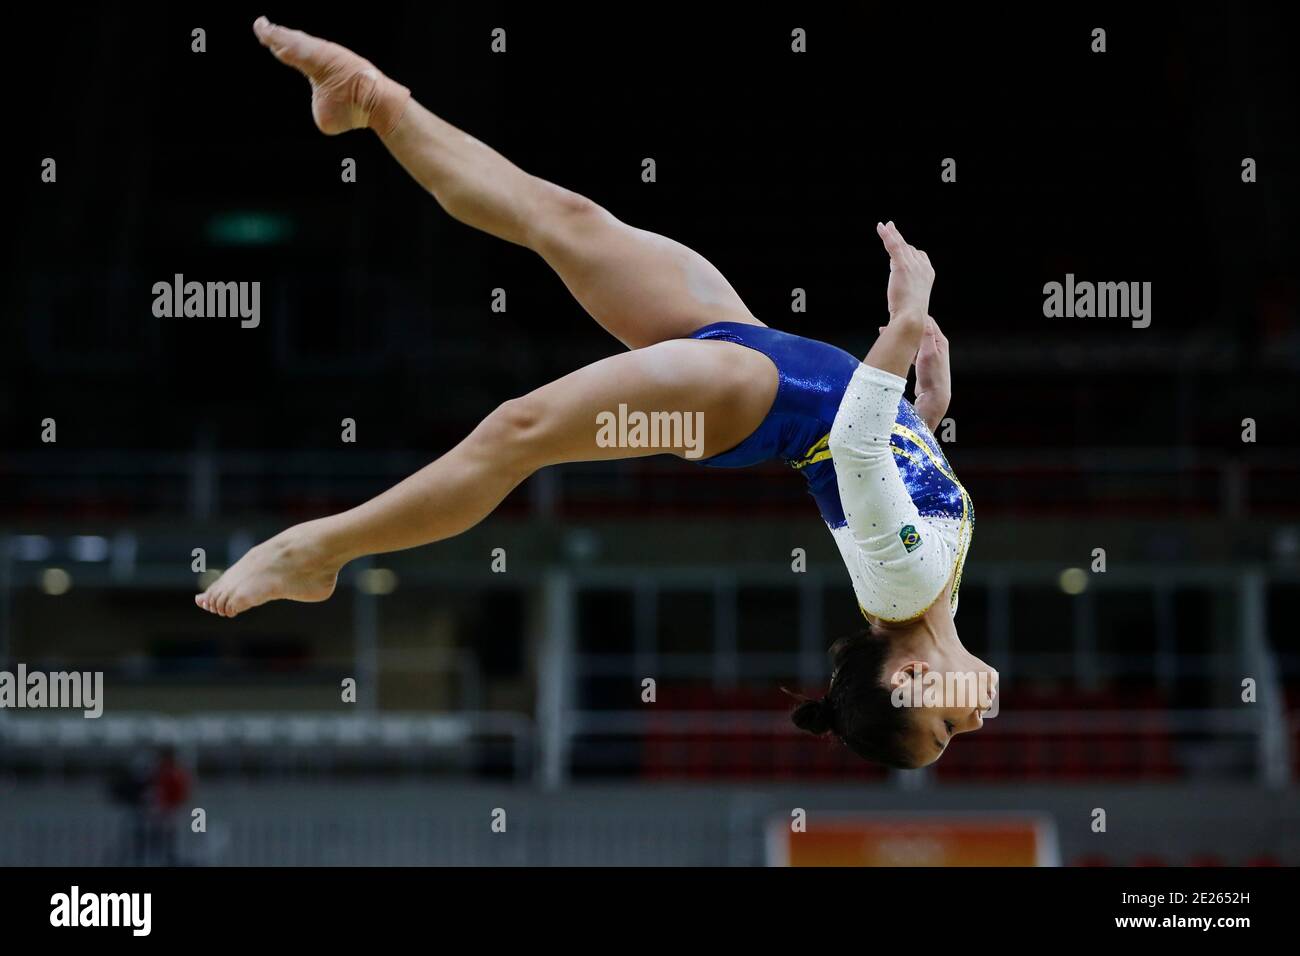 Gymnastics at the 2016 Summer Olympics – Women's artistic team all